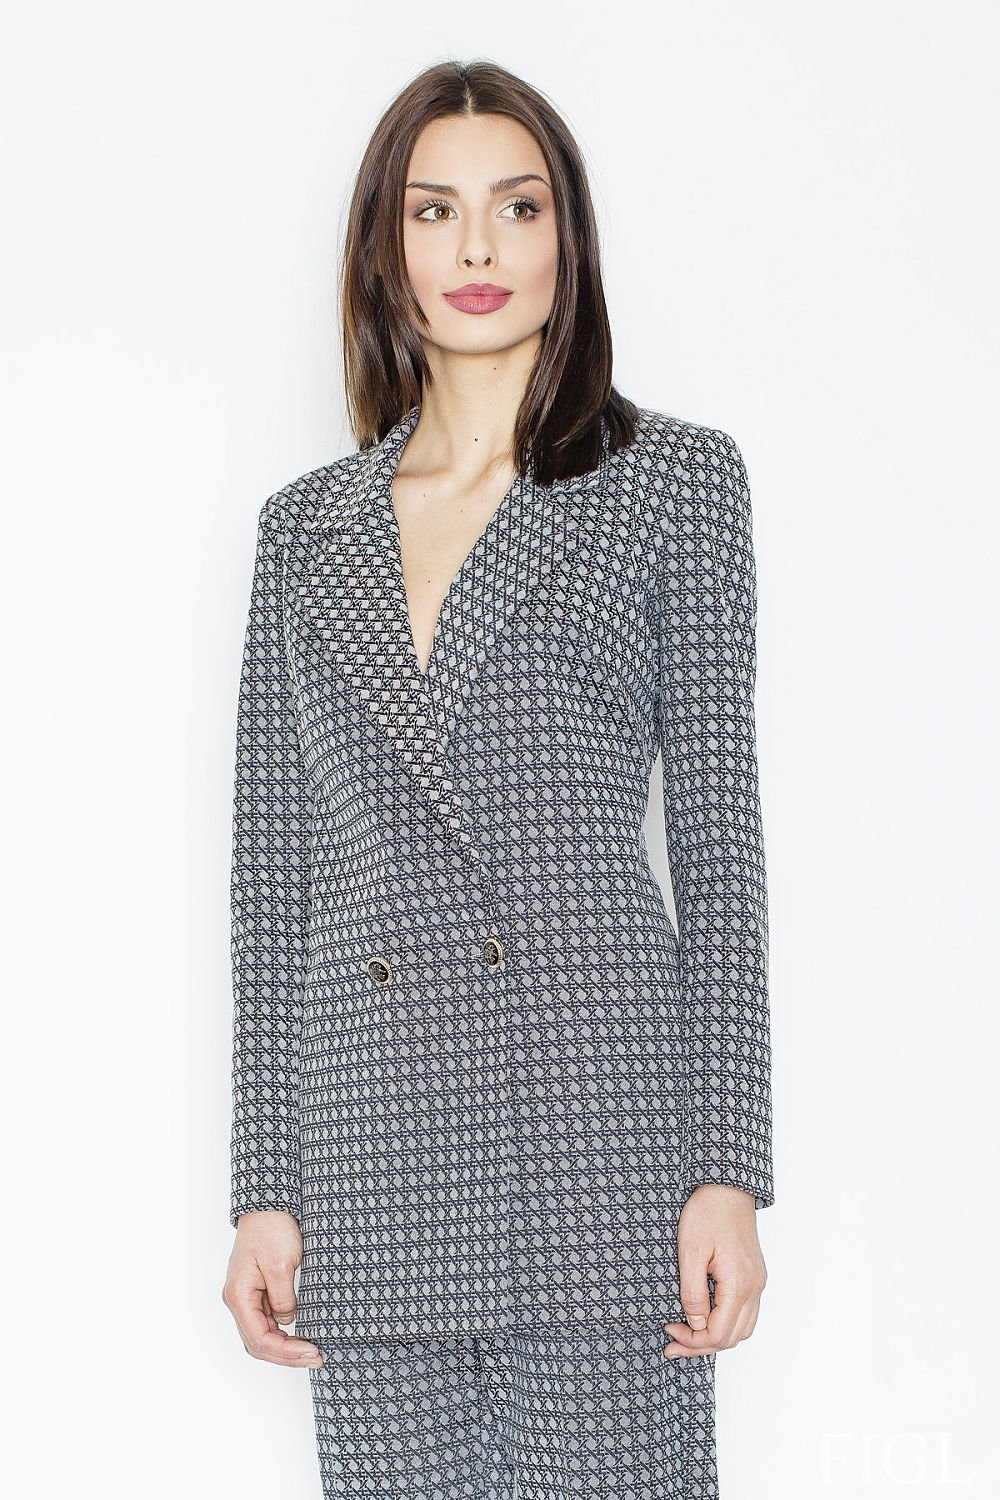 Jacket model 52554 Figl Jackets, Vests for Women Wholesale Clothing ...